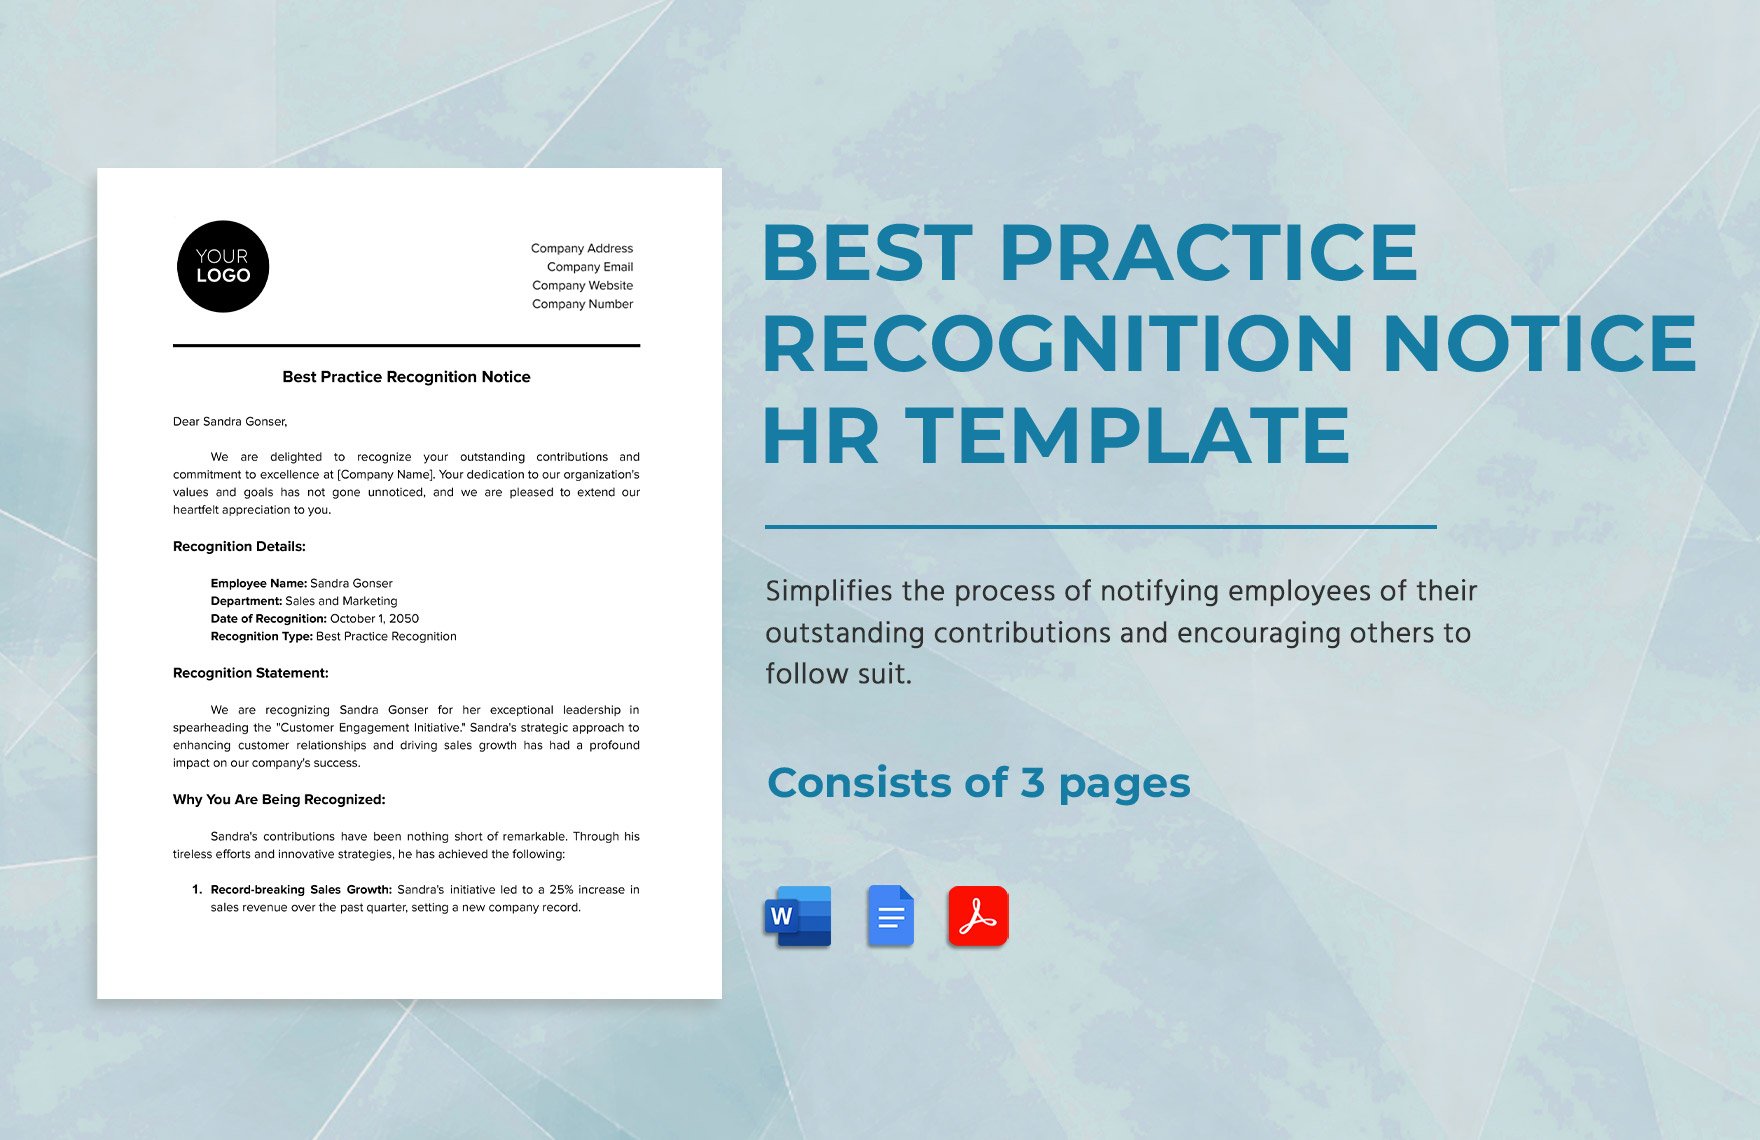 Best Practice Recognition Notice HR Template